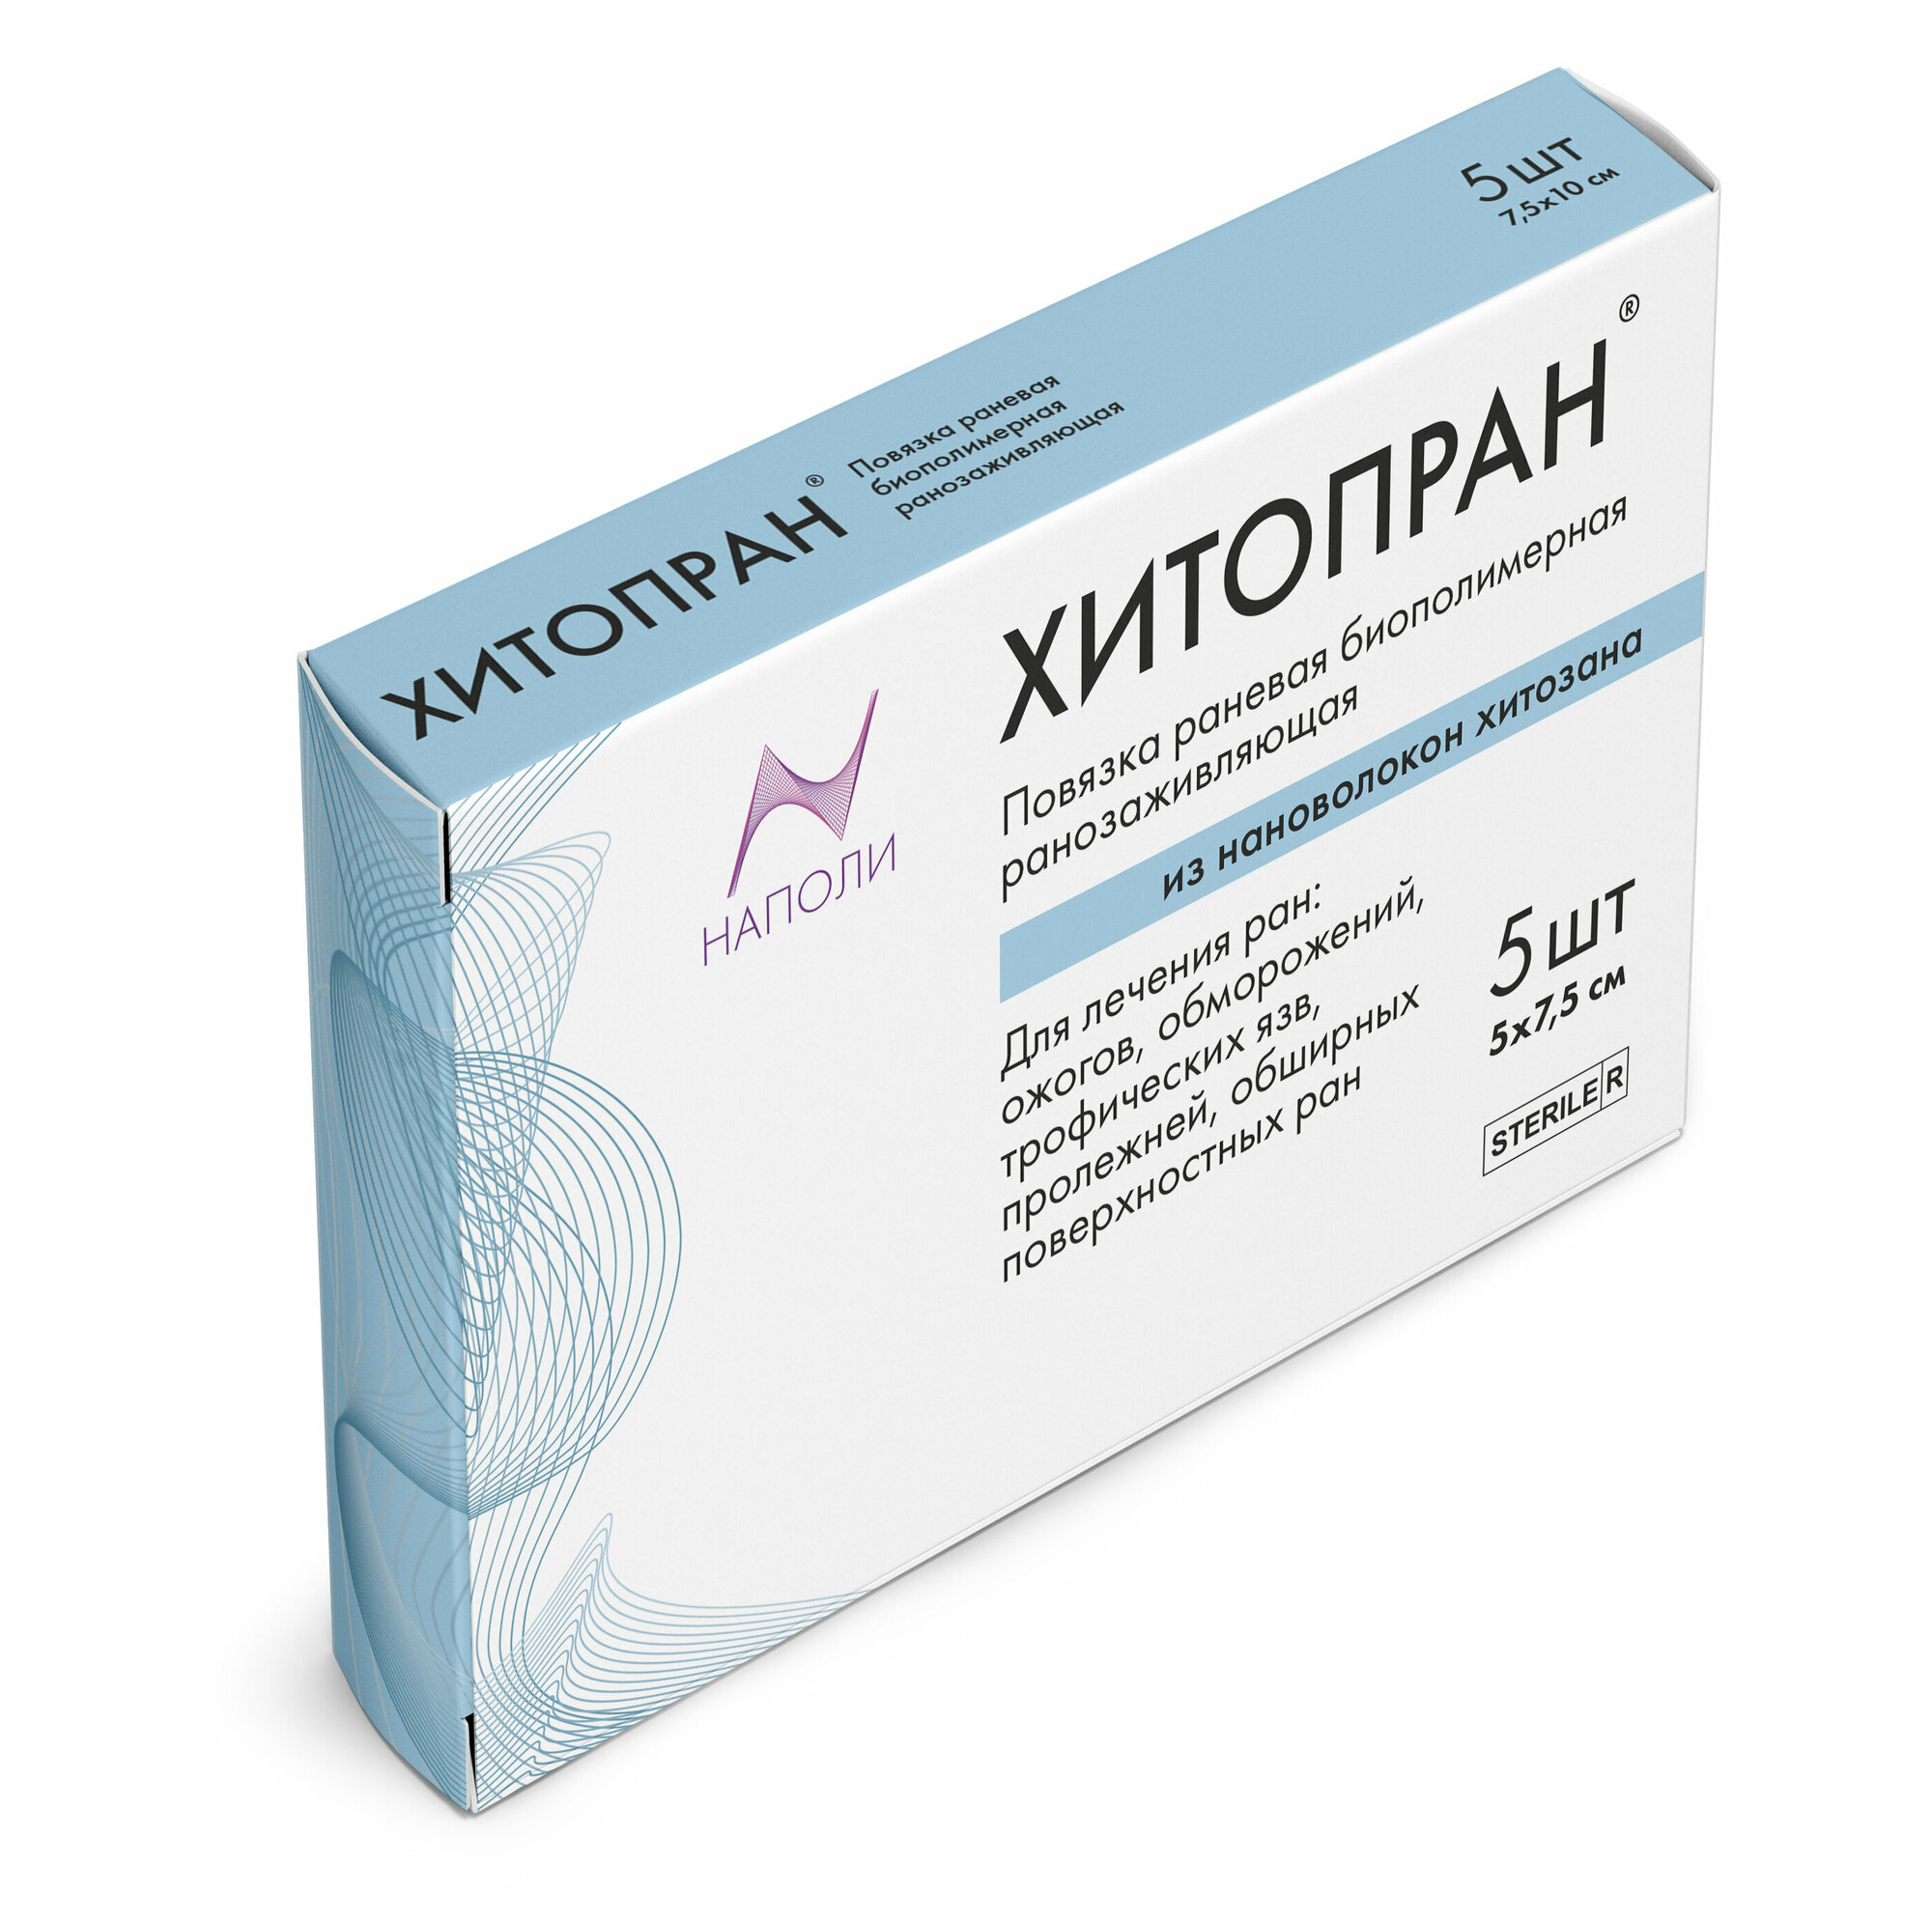 Хитопран - биополимерная повязка с хитозаном, 5x7,5 см (5 шт.)